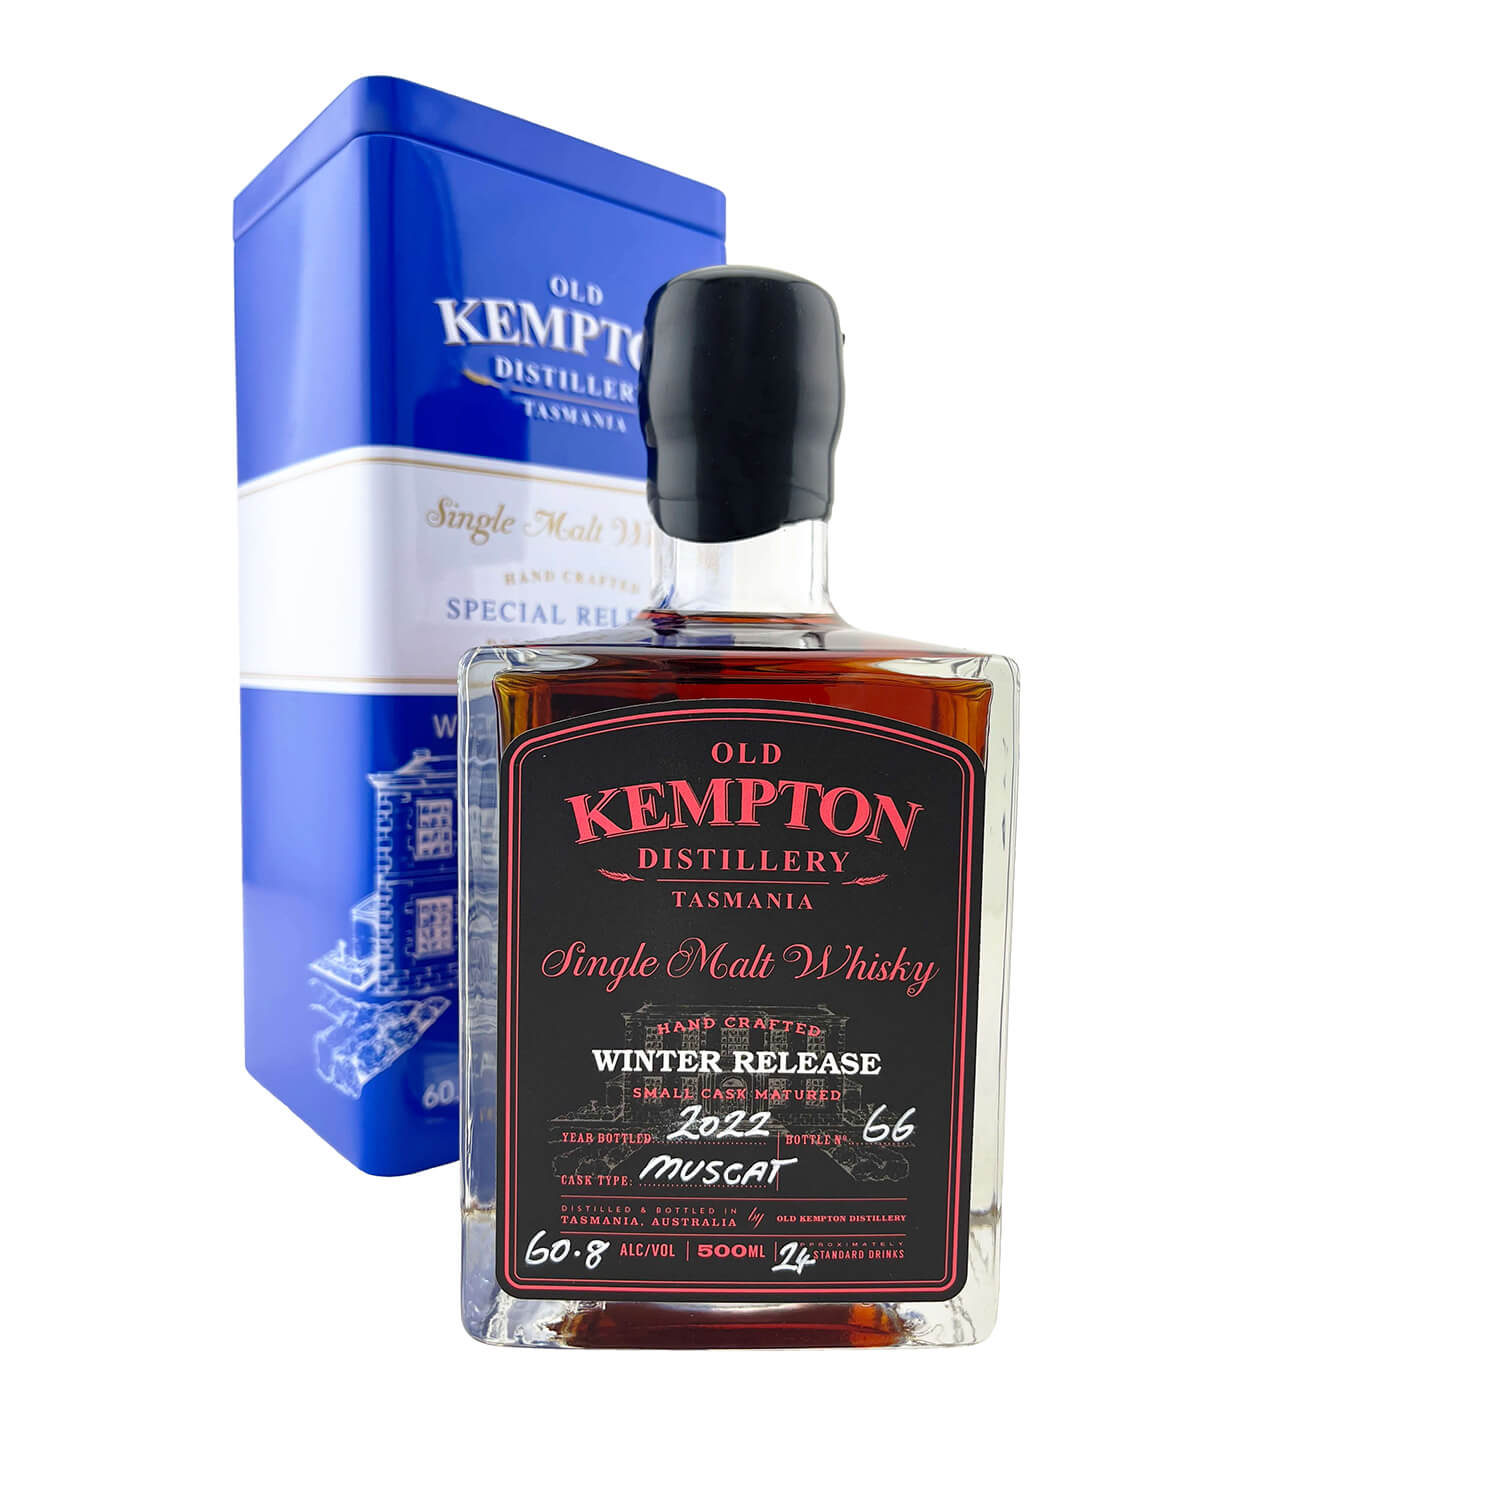 Old Kempton Distillery 2022 Winter Release Muscat Cask, Tasmanian Whisky, Australian Whisky, The Old Barrelhouse